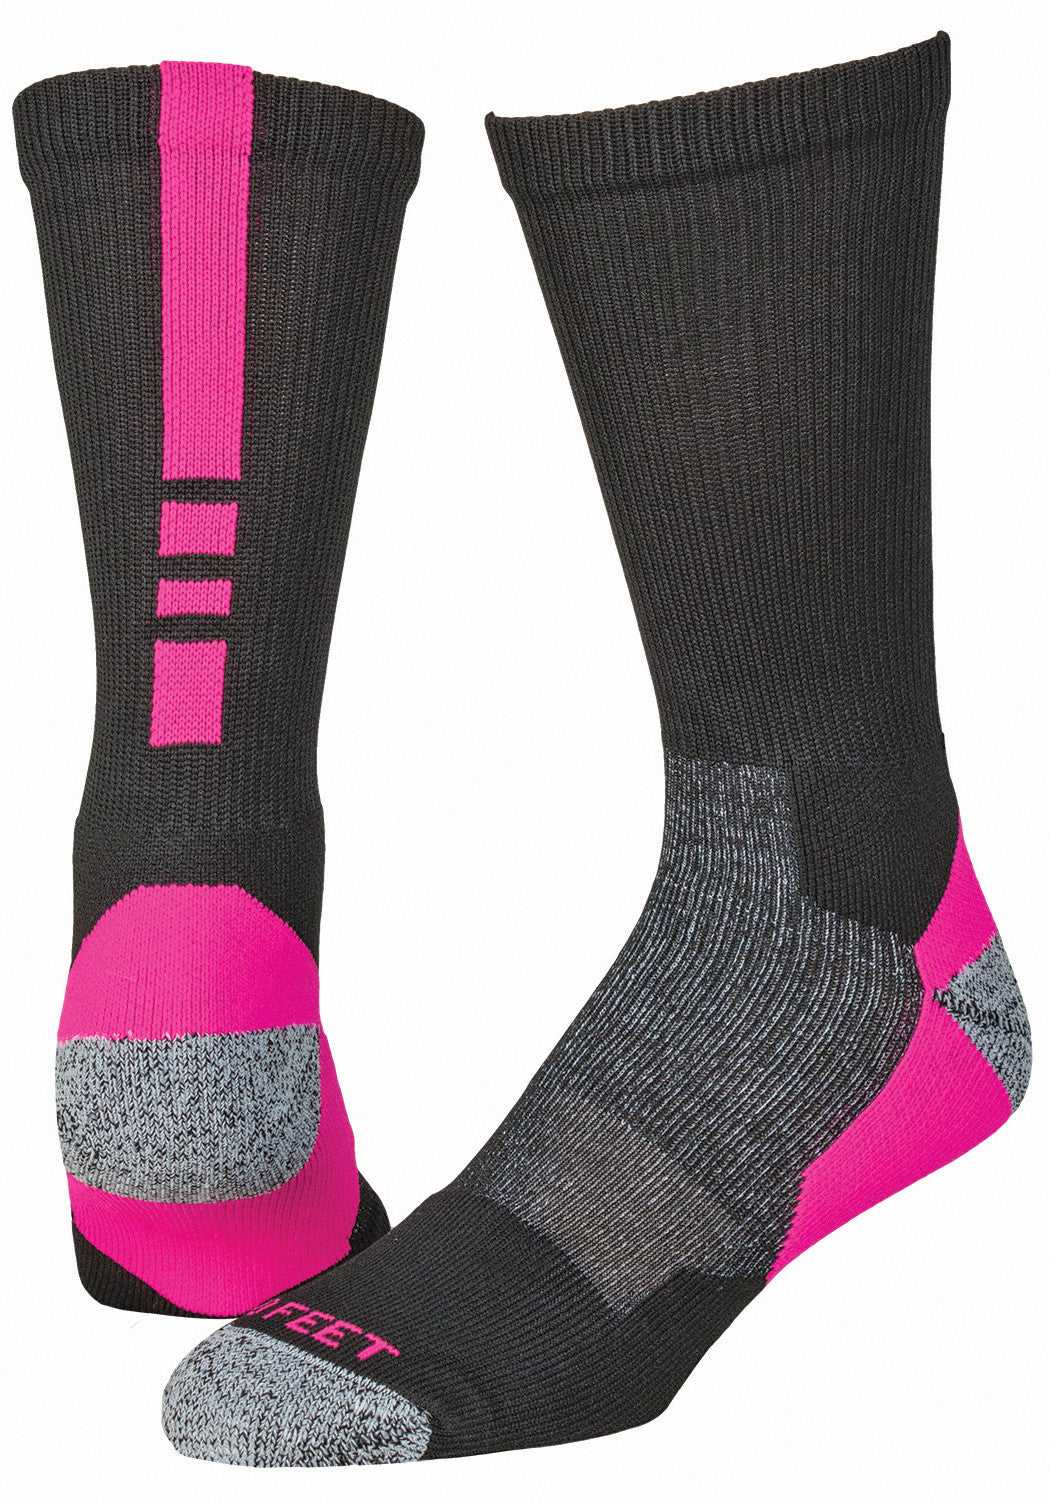 Pro Feet 238 Pro Feet Performance Shooter 2.0 Crew Socks - Black Neon Pink - HIT a Double